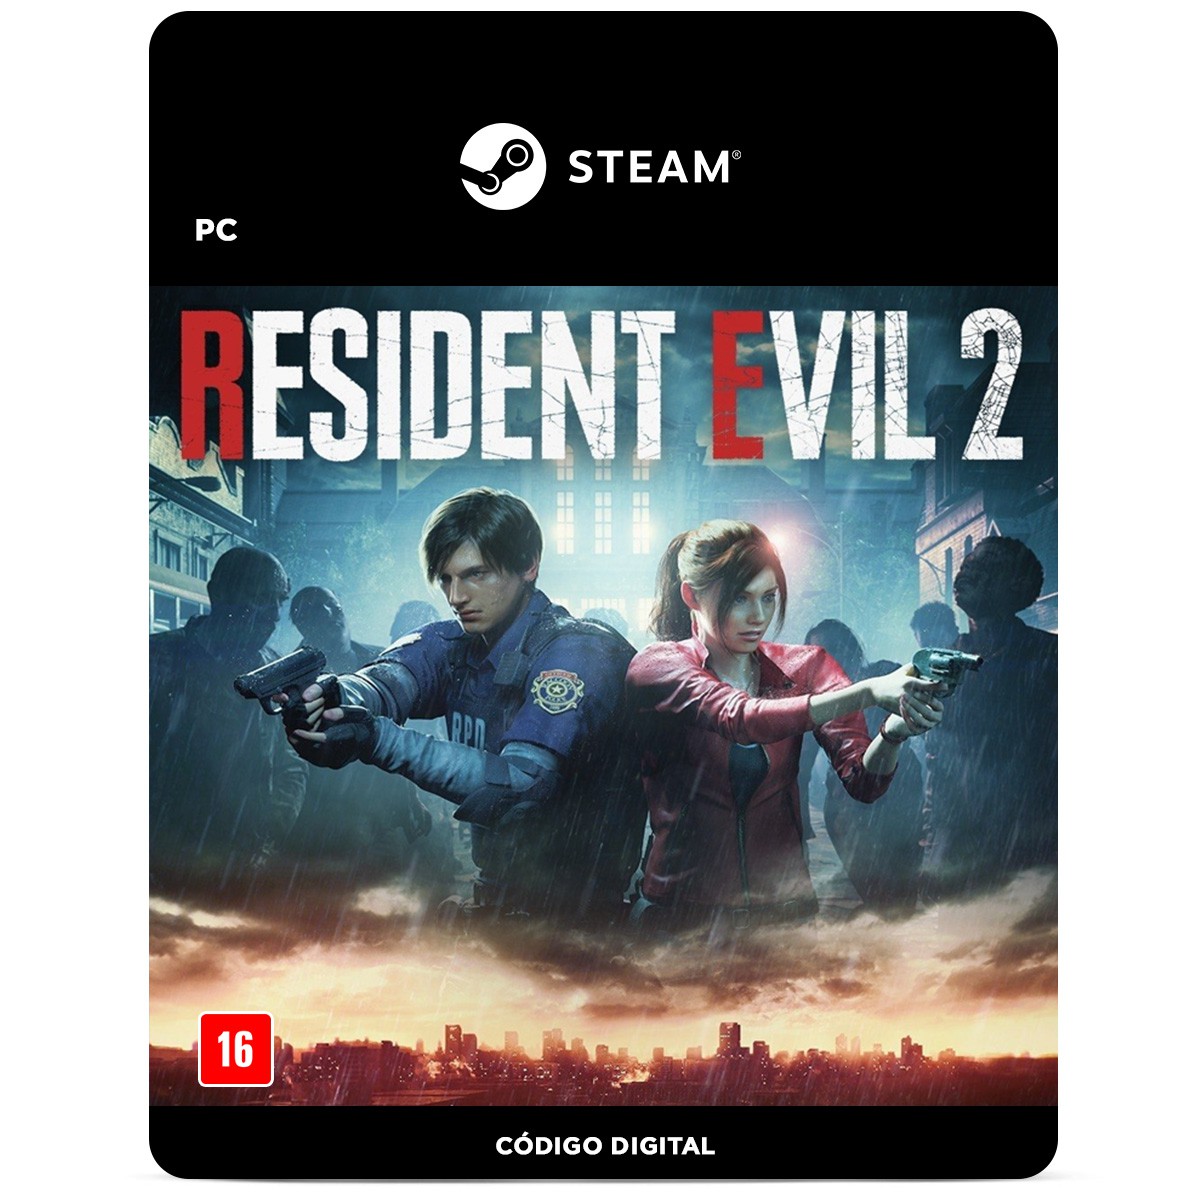 Resident Evil 4 Remake Deluxe Edition - PC Código Digital - PentaKill -  PentaKill Store - Gift Card e Games